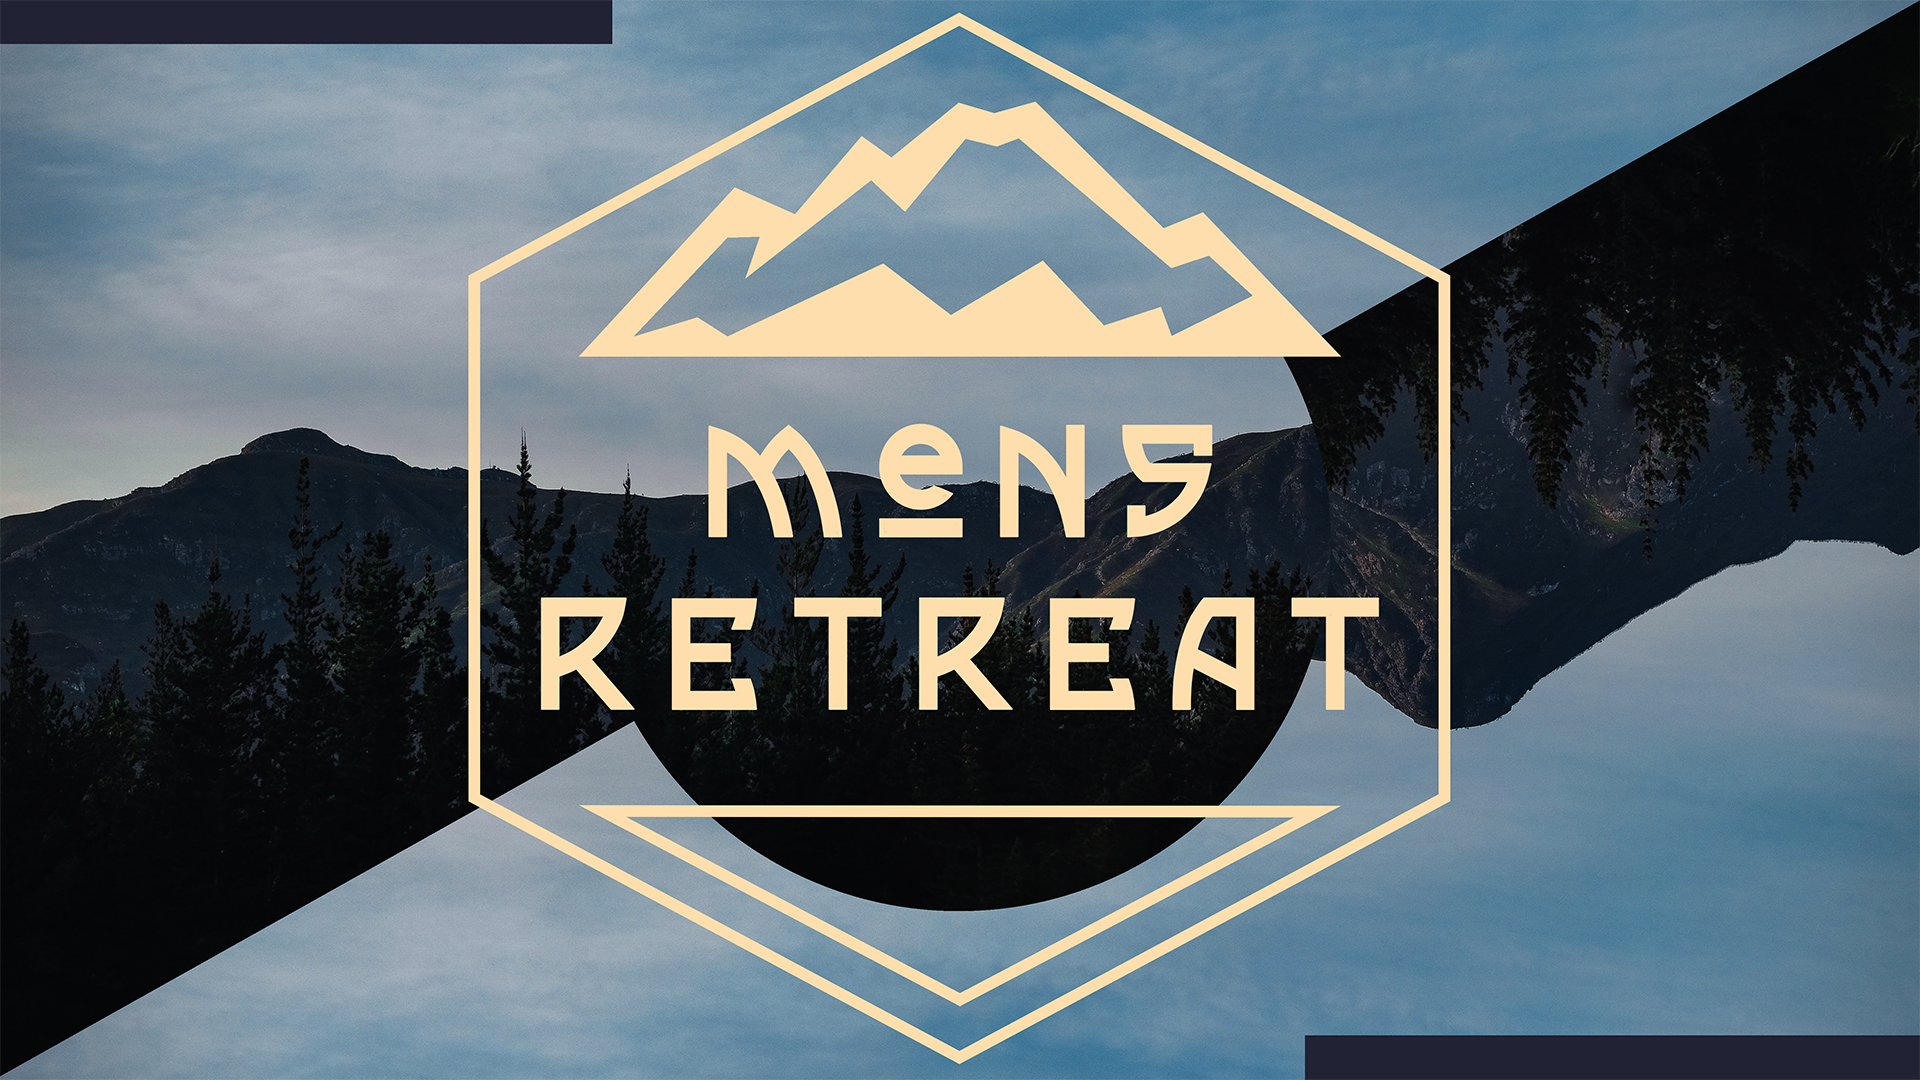 Men's Retreat 1920 x 1080